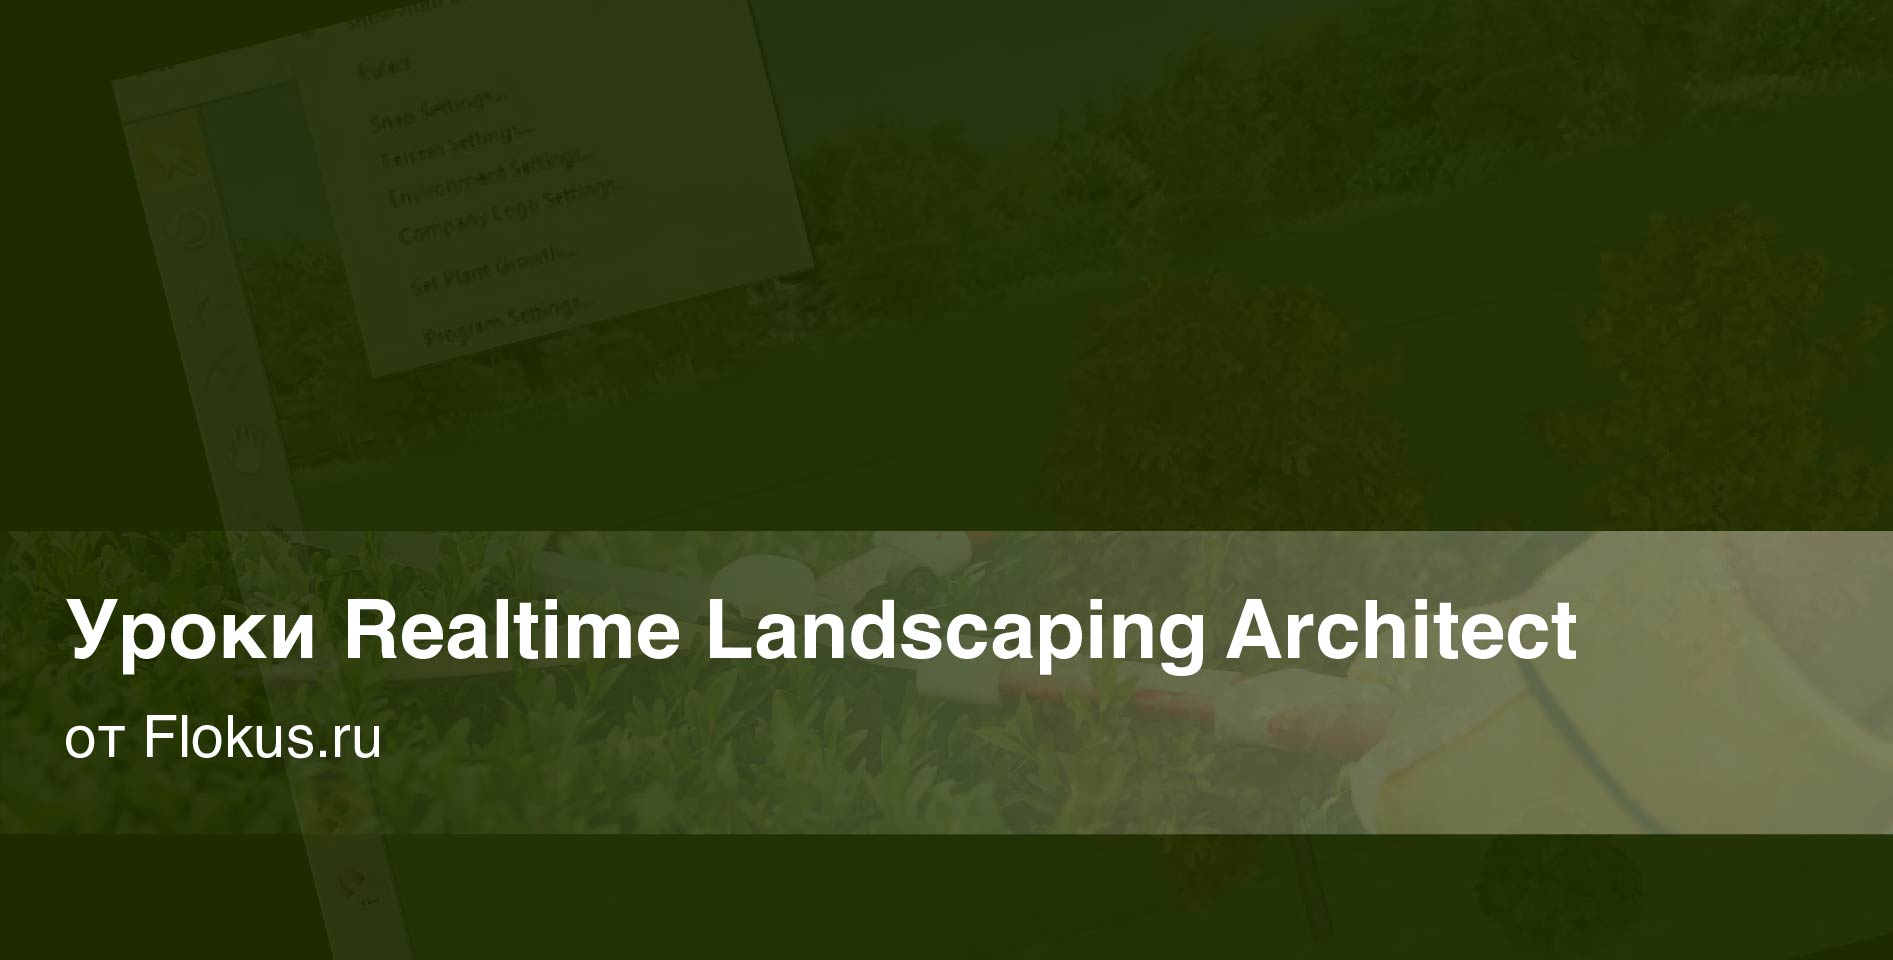 Flokus.ru — Realtime Landscaping Architect